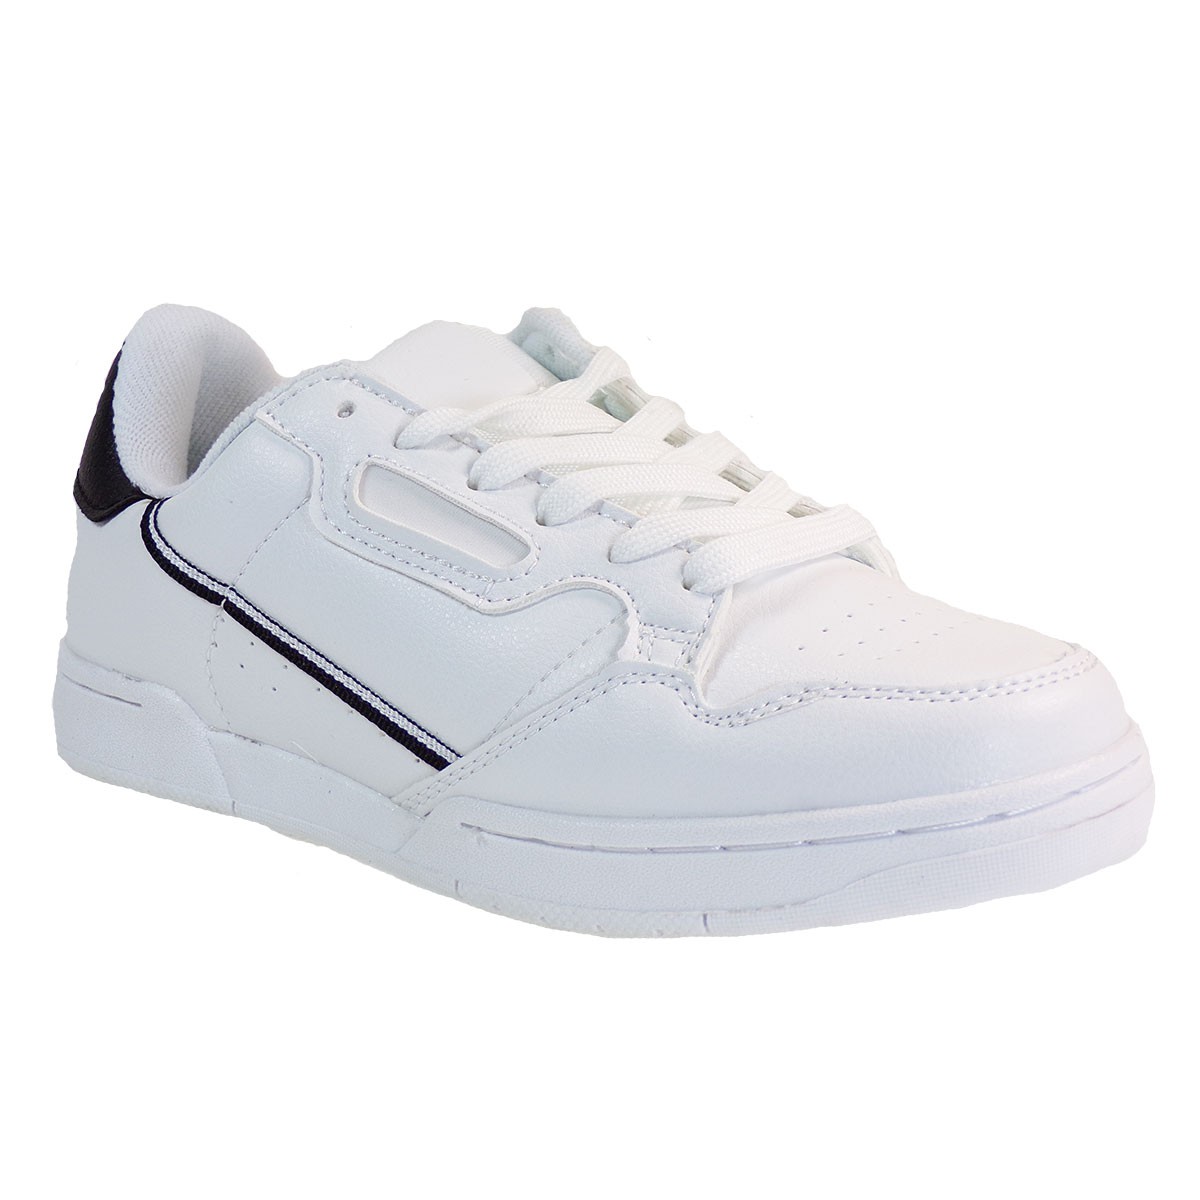 Bagiota Shoes Γυναικεία Παπούτσια Sneakers Αθλητικά L-1674-3 Λευκό-Mαύρο